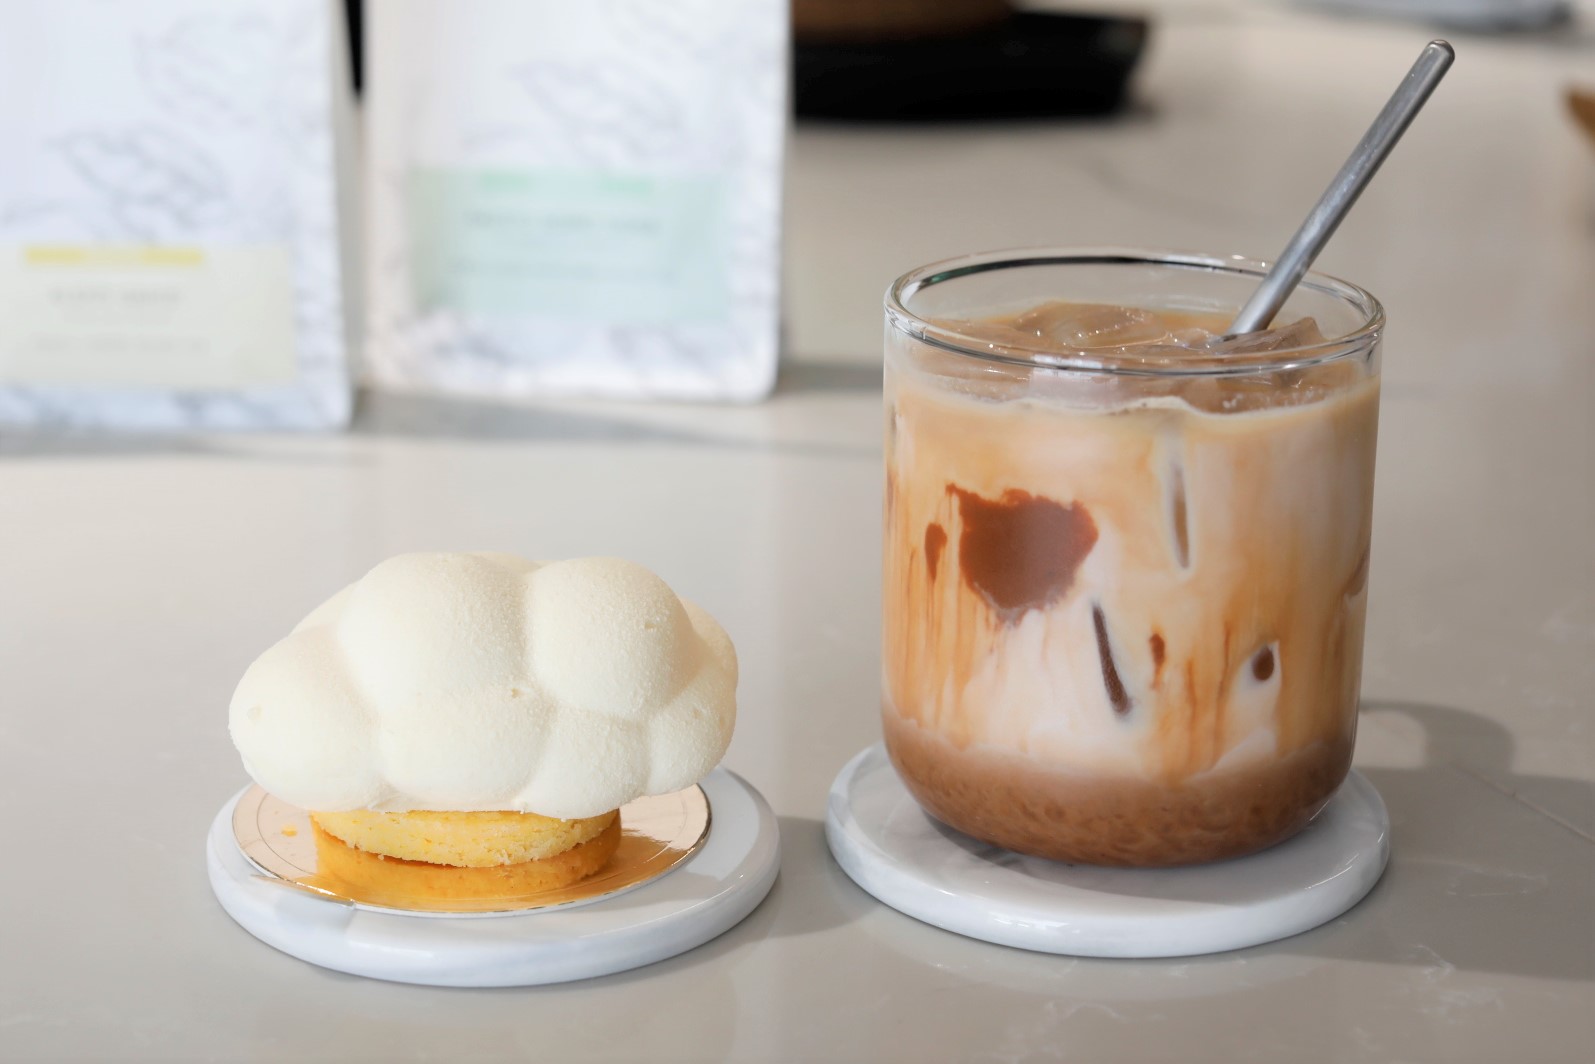 Lucid – Minimalist Grey Café With Cloud Cake And Good Coffee At Jalan Besar  – DanielFoodDiary.com